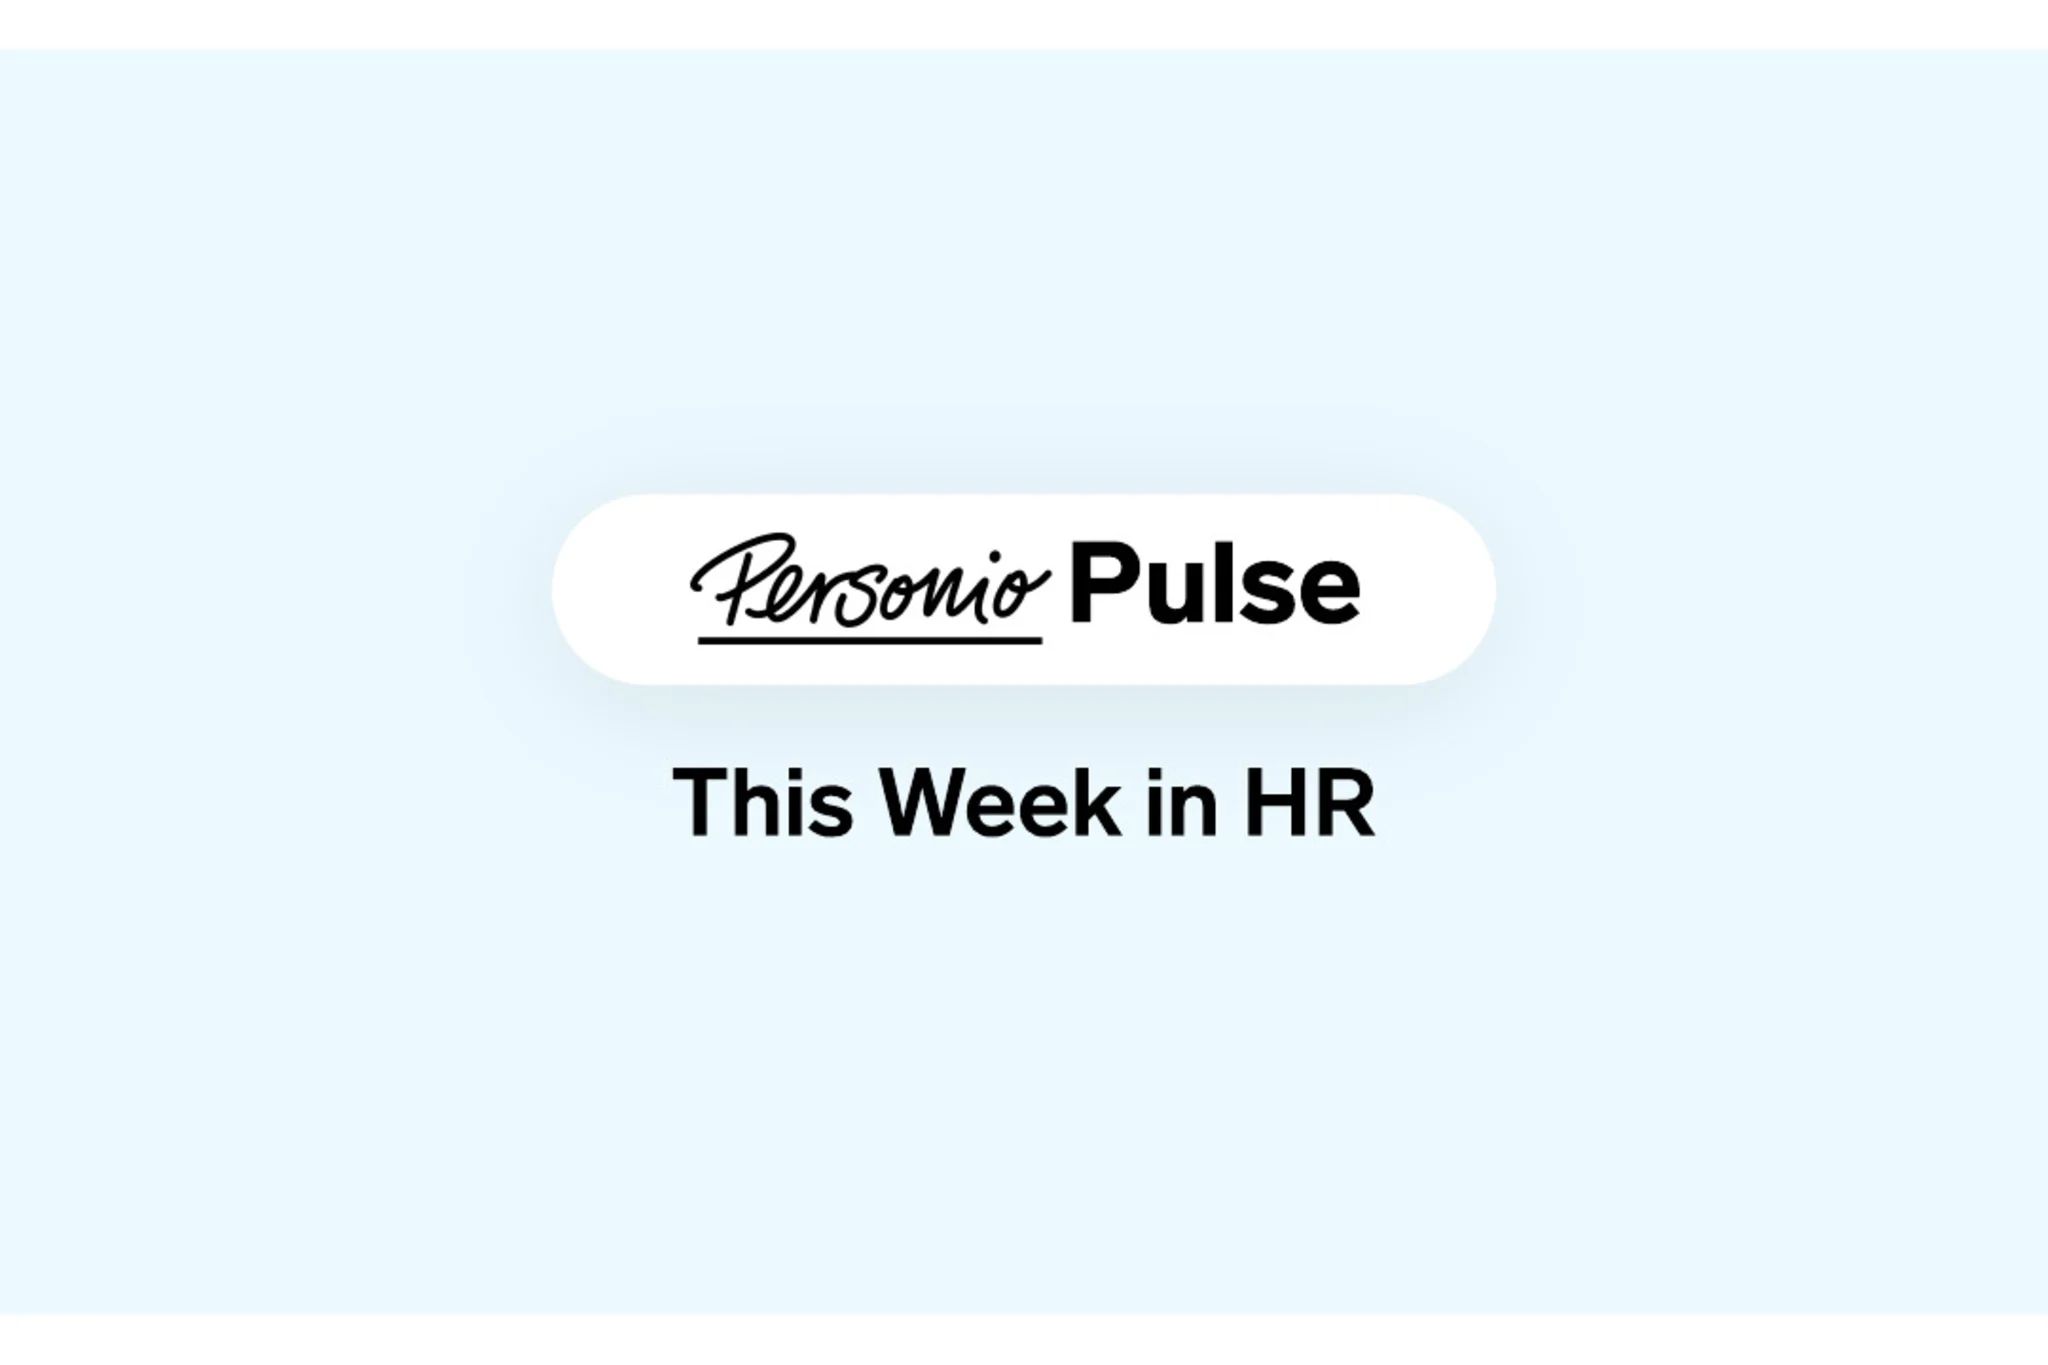 Personio Pulse: This Week in HR - 3